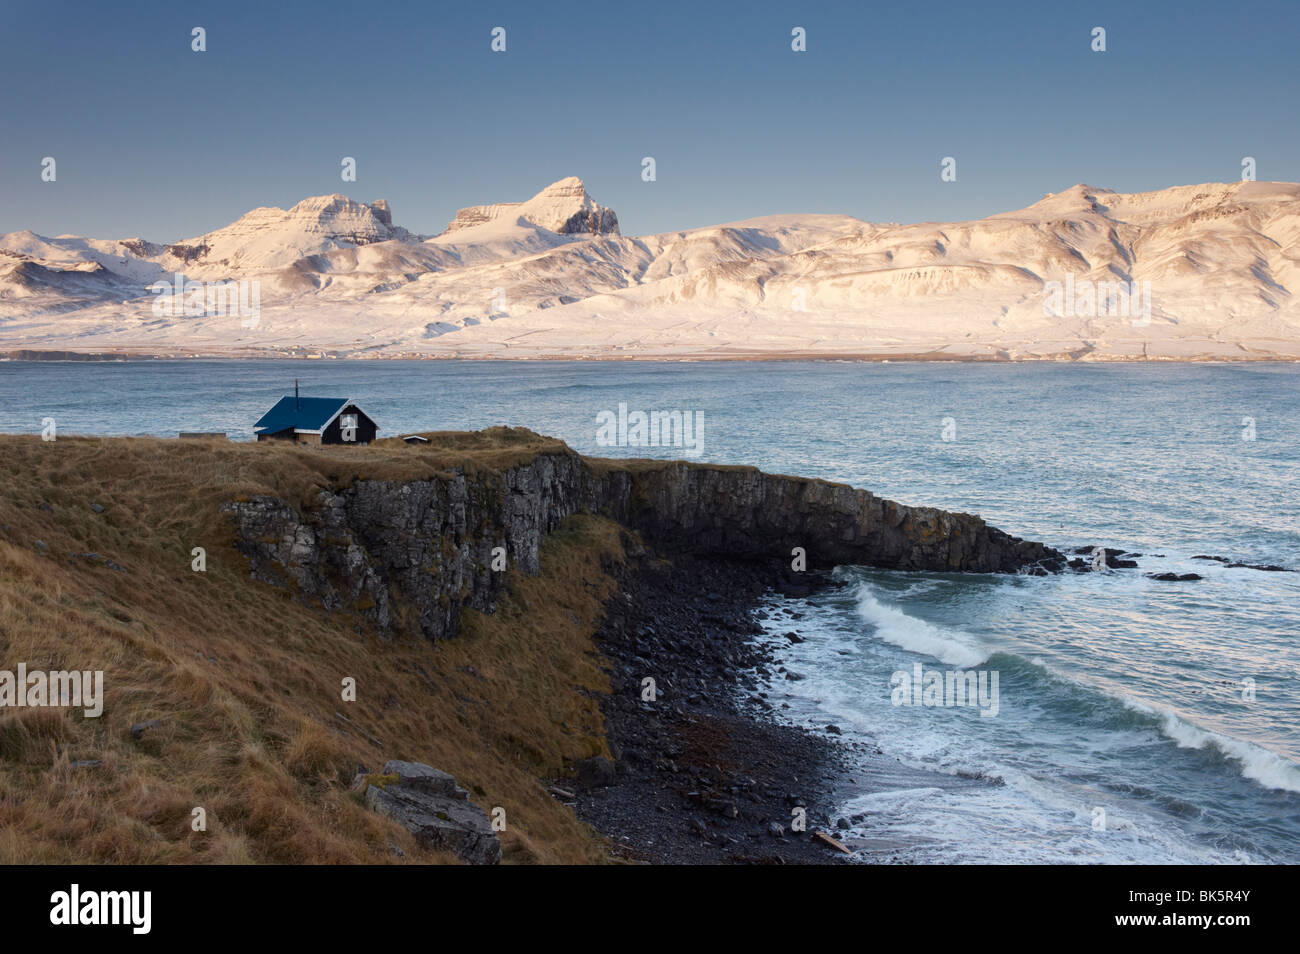 Casa Piccola e Borgarfjordur Eystri fiordo, Mount Dyrfjoll (Porta Montagna), 1136m, in background, Oriente fiordi, Islanda Foto Stock